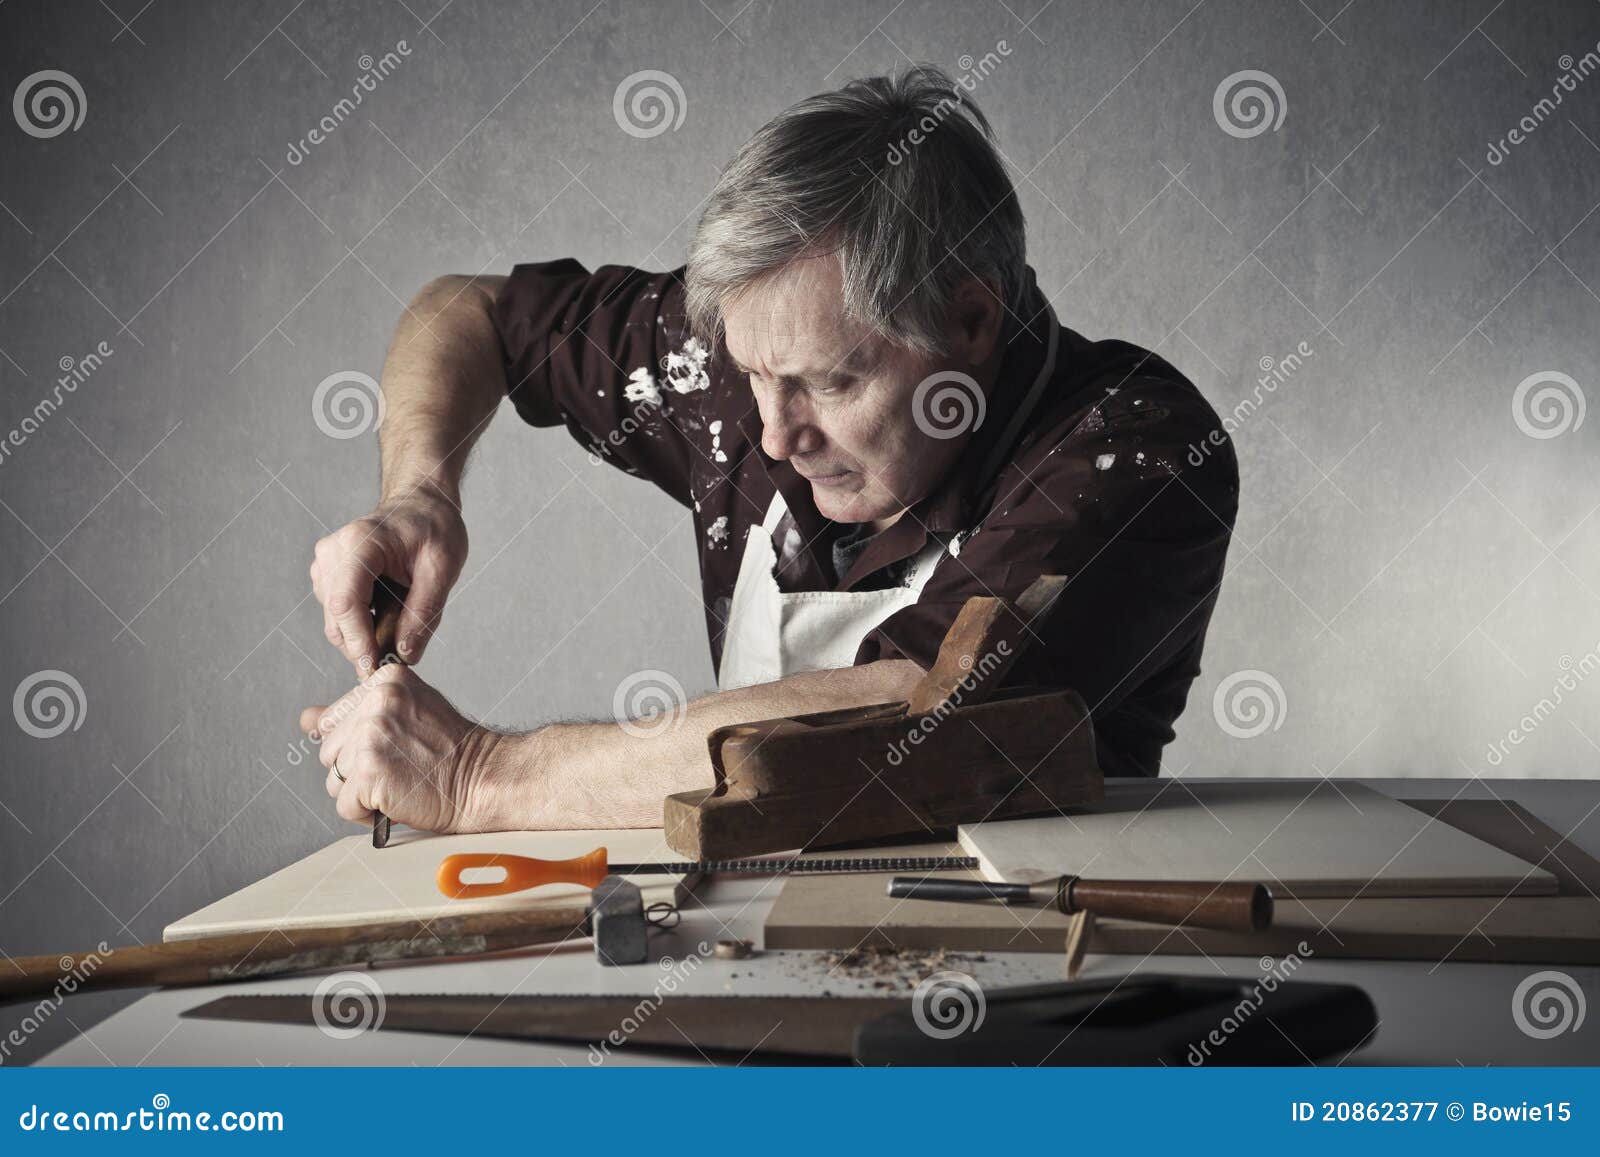 Craftsman stock image. Image of senior, handicraftsman - 20862377